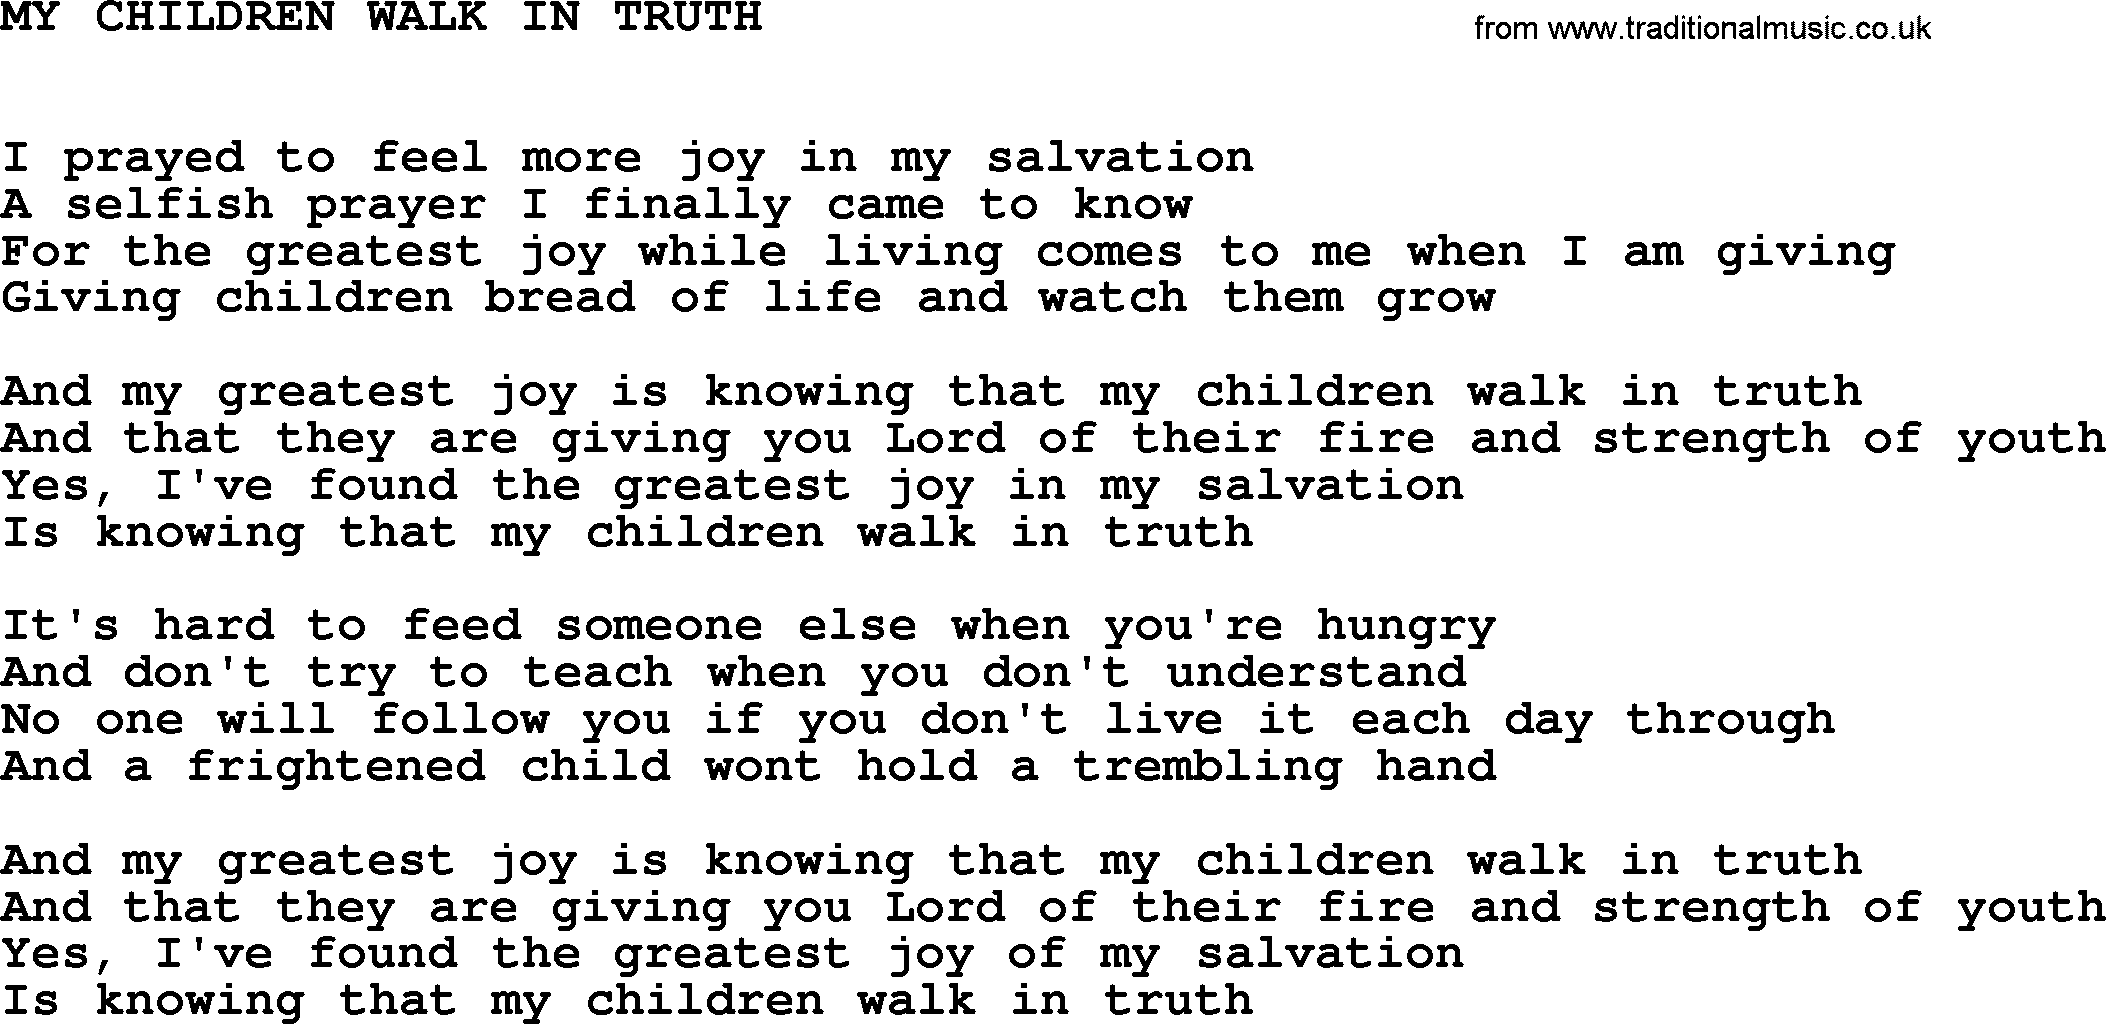 Johnny Cash song My Children Walk In Truth.txt lyrics